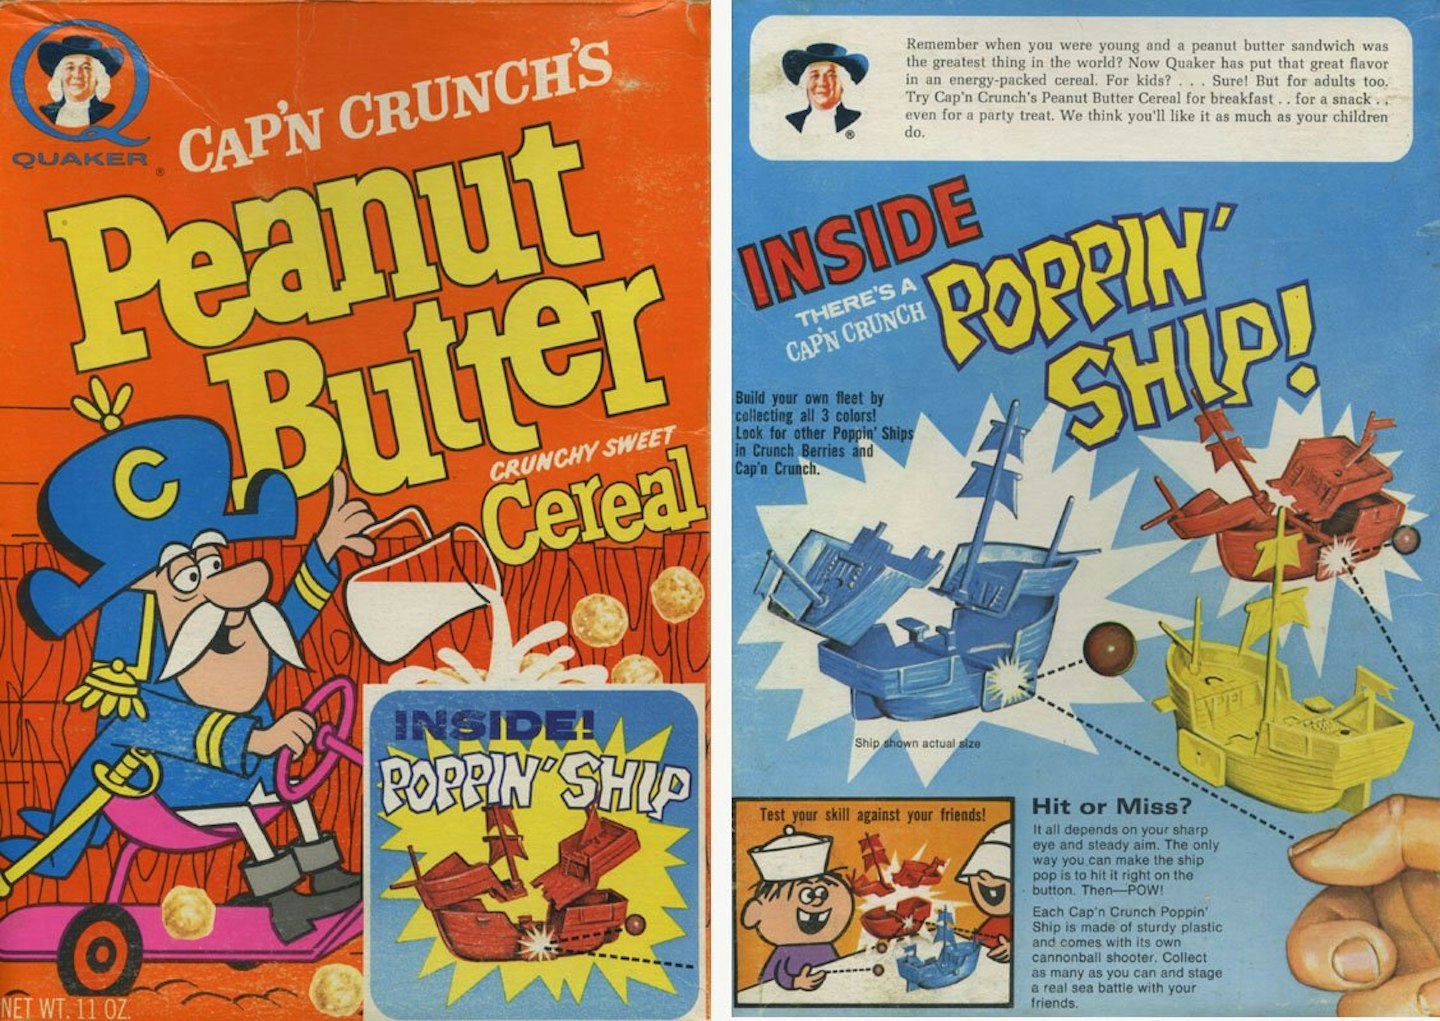 Discontinued cereals Cap'n Crunch